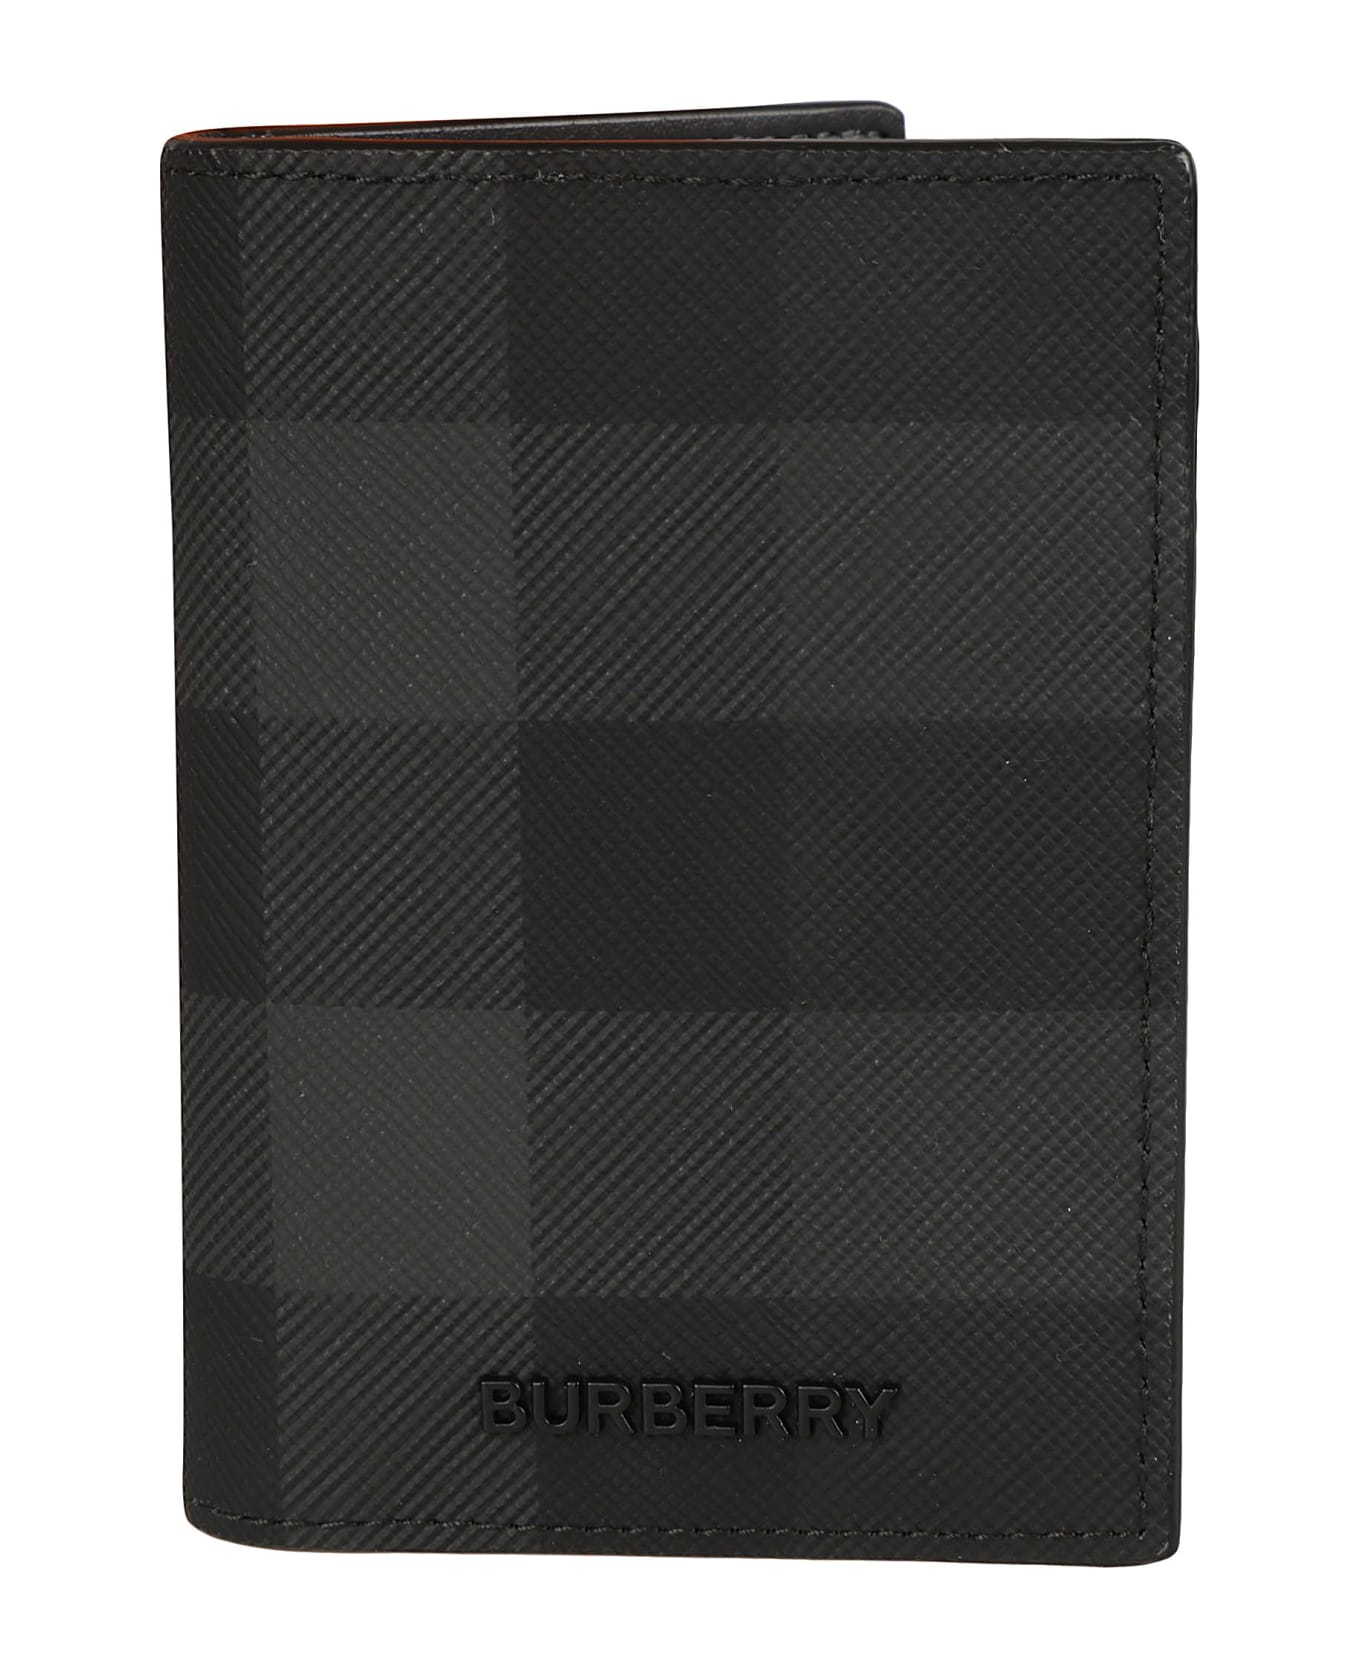 Burberry Bateman Wallet - Charcoal